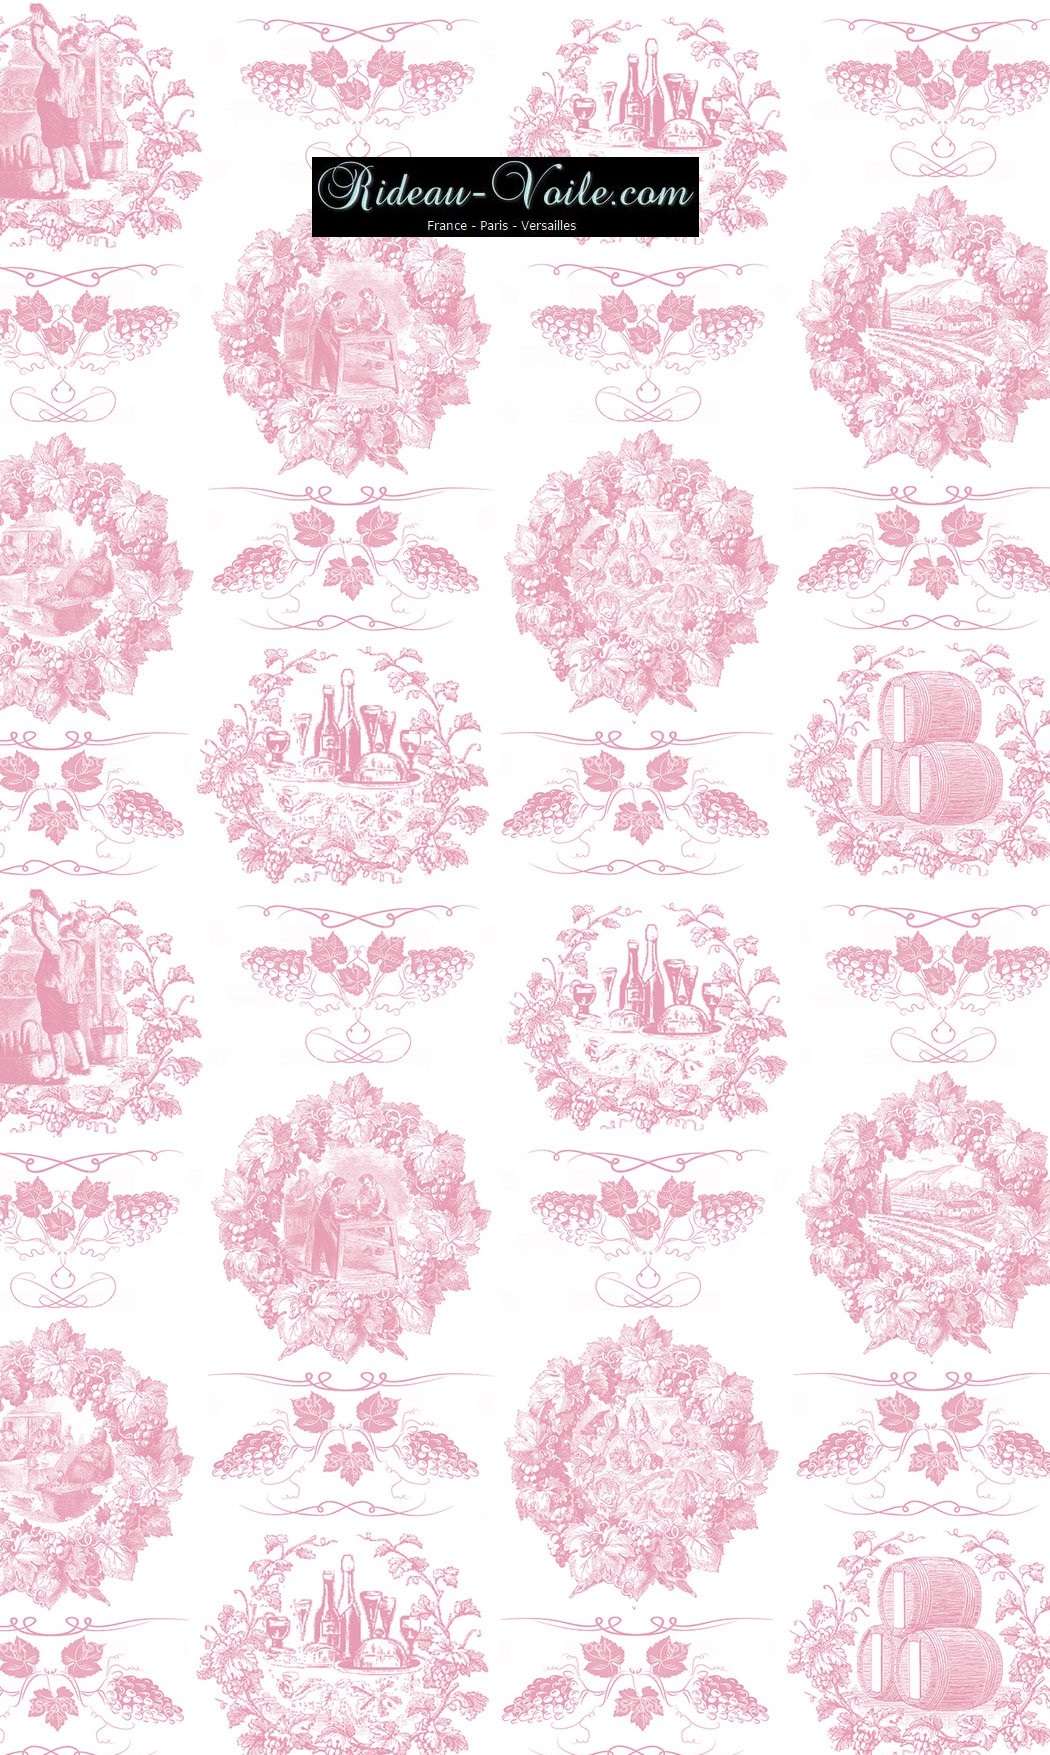 Toile de jouy tissu motif imprimé ameublement décoration tapisserie linge de maison housse coussin couette luxe lit fabric pattern printed home furnishing decoration tapestry linens cover cushion quilt luxury upholstery rose pink